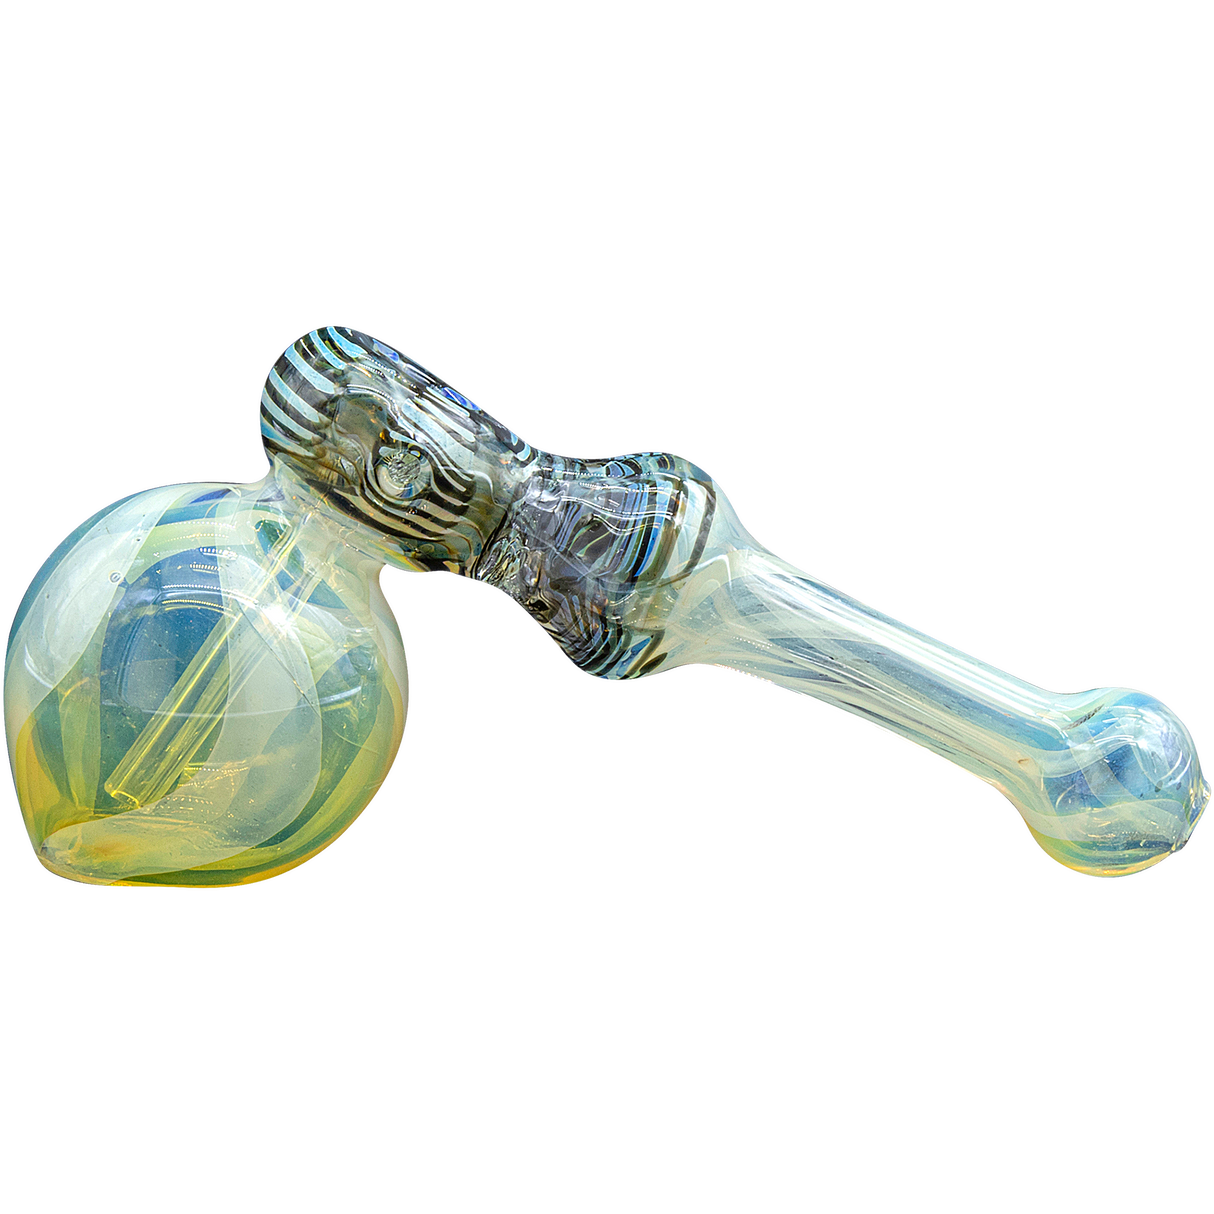 LA Pipes "Raked Hammer" Fumed Hammer Bubbler Pipe in Black Onyx, 6" Borosilicate Glass